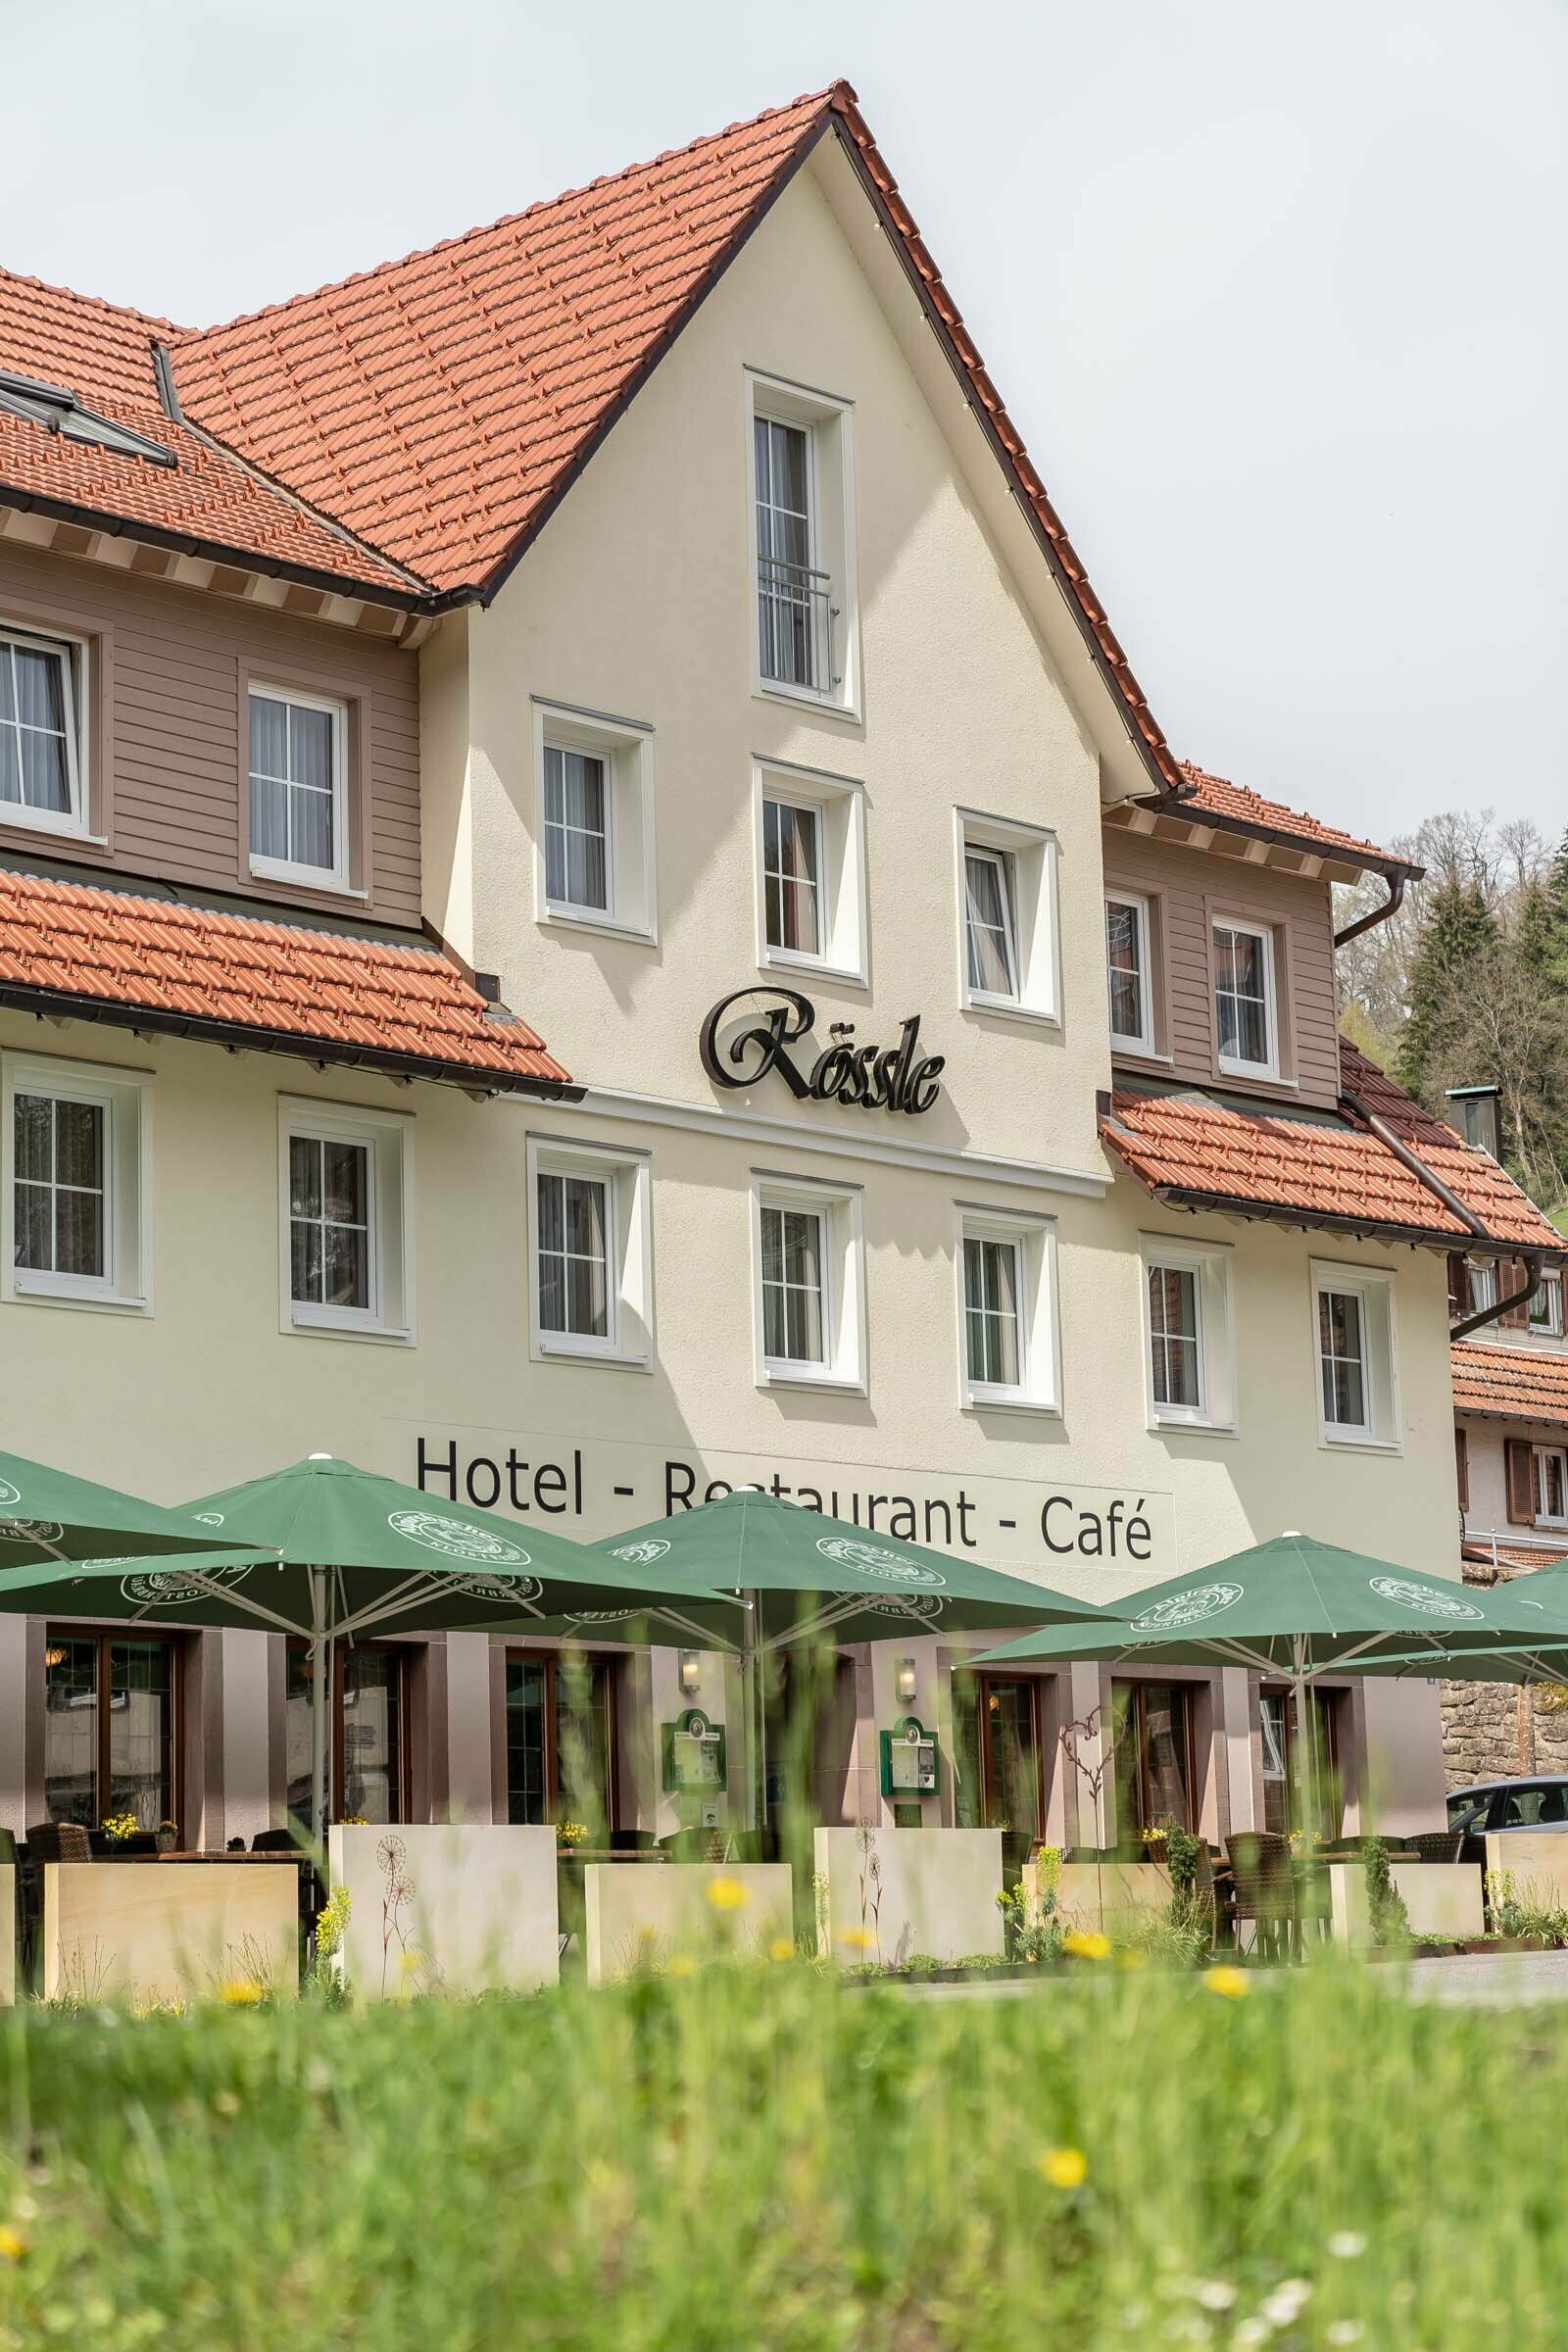 Tapetenwechsel-ab in die Natur 4 Tage/3 Nächte – Hotel Rössle Berneck  in Altensteig, Baden-Württemberg inkl. Halbpension